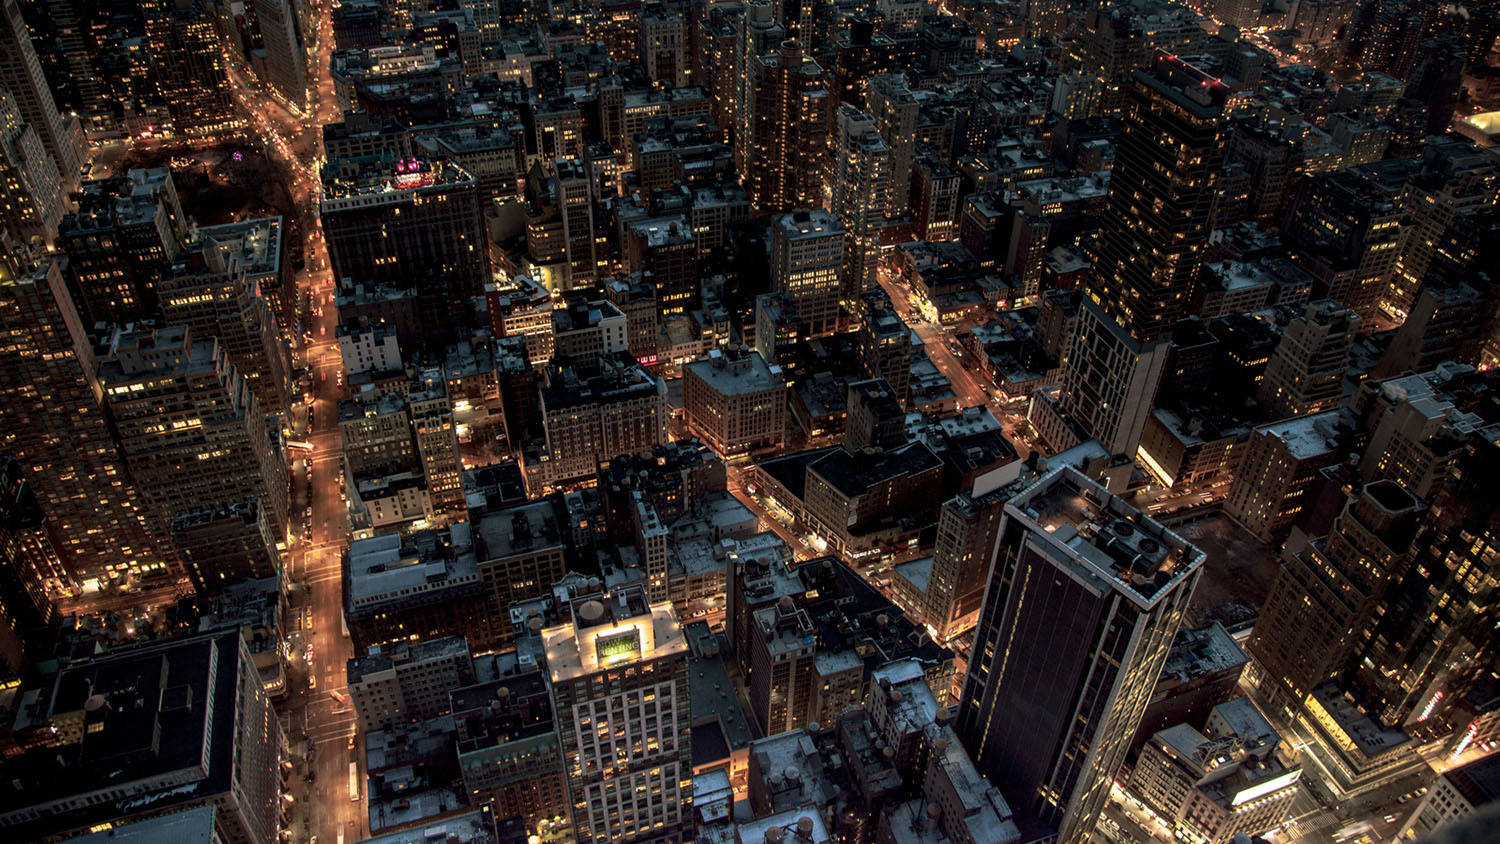 Stunning photos of New York at night